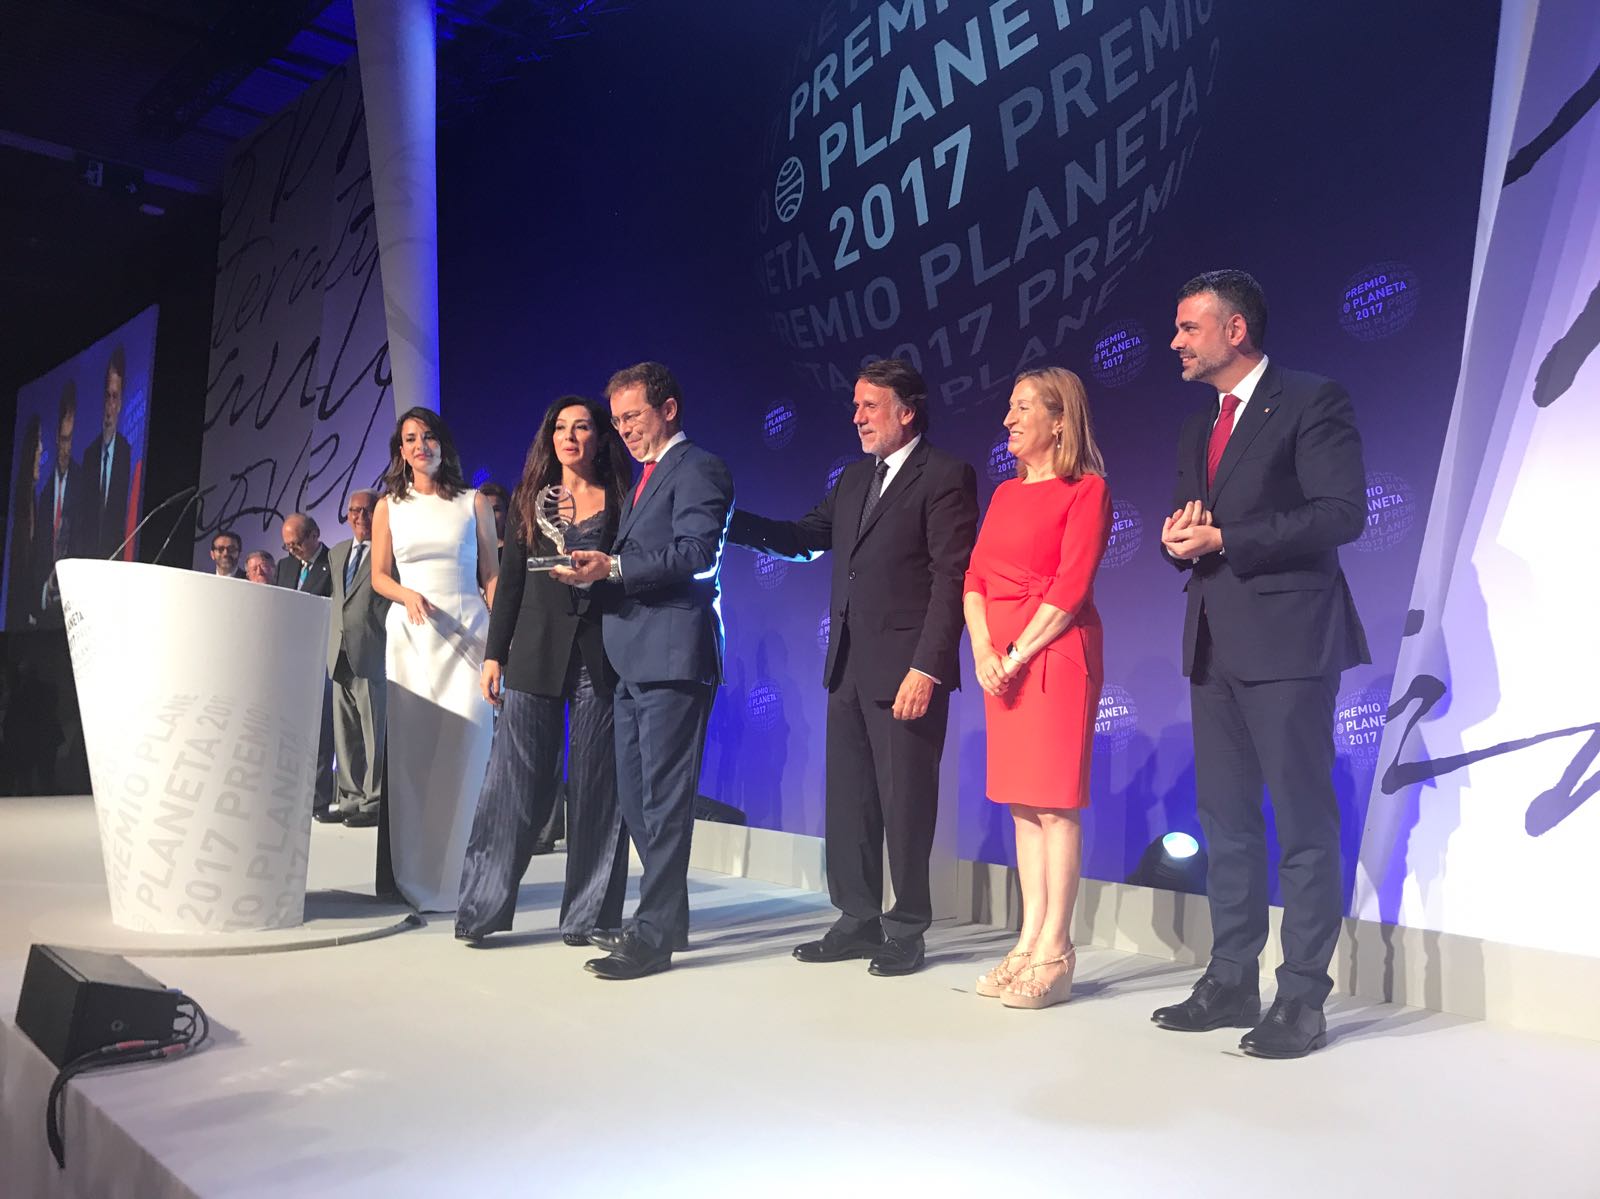 Javier Sierra recoge el Premio Planeta 2017, junto a la finalista, Cristina López Barrio